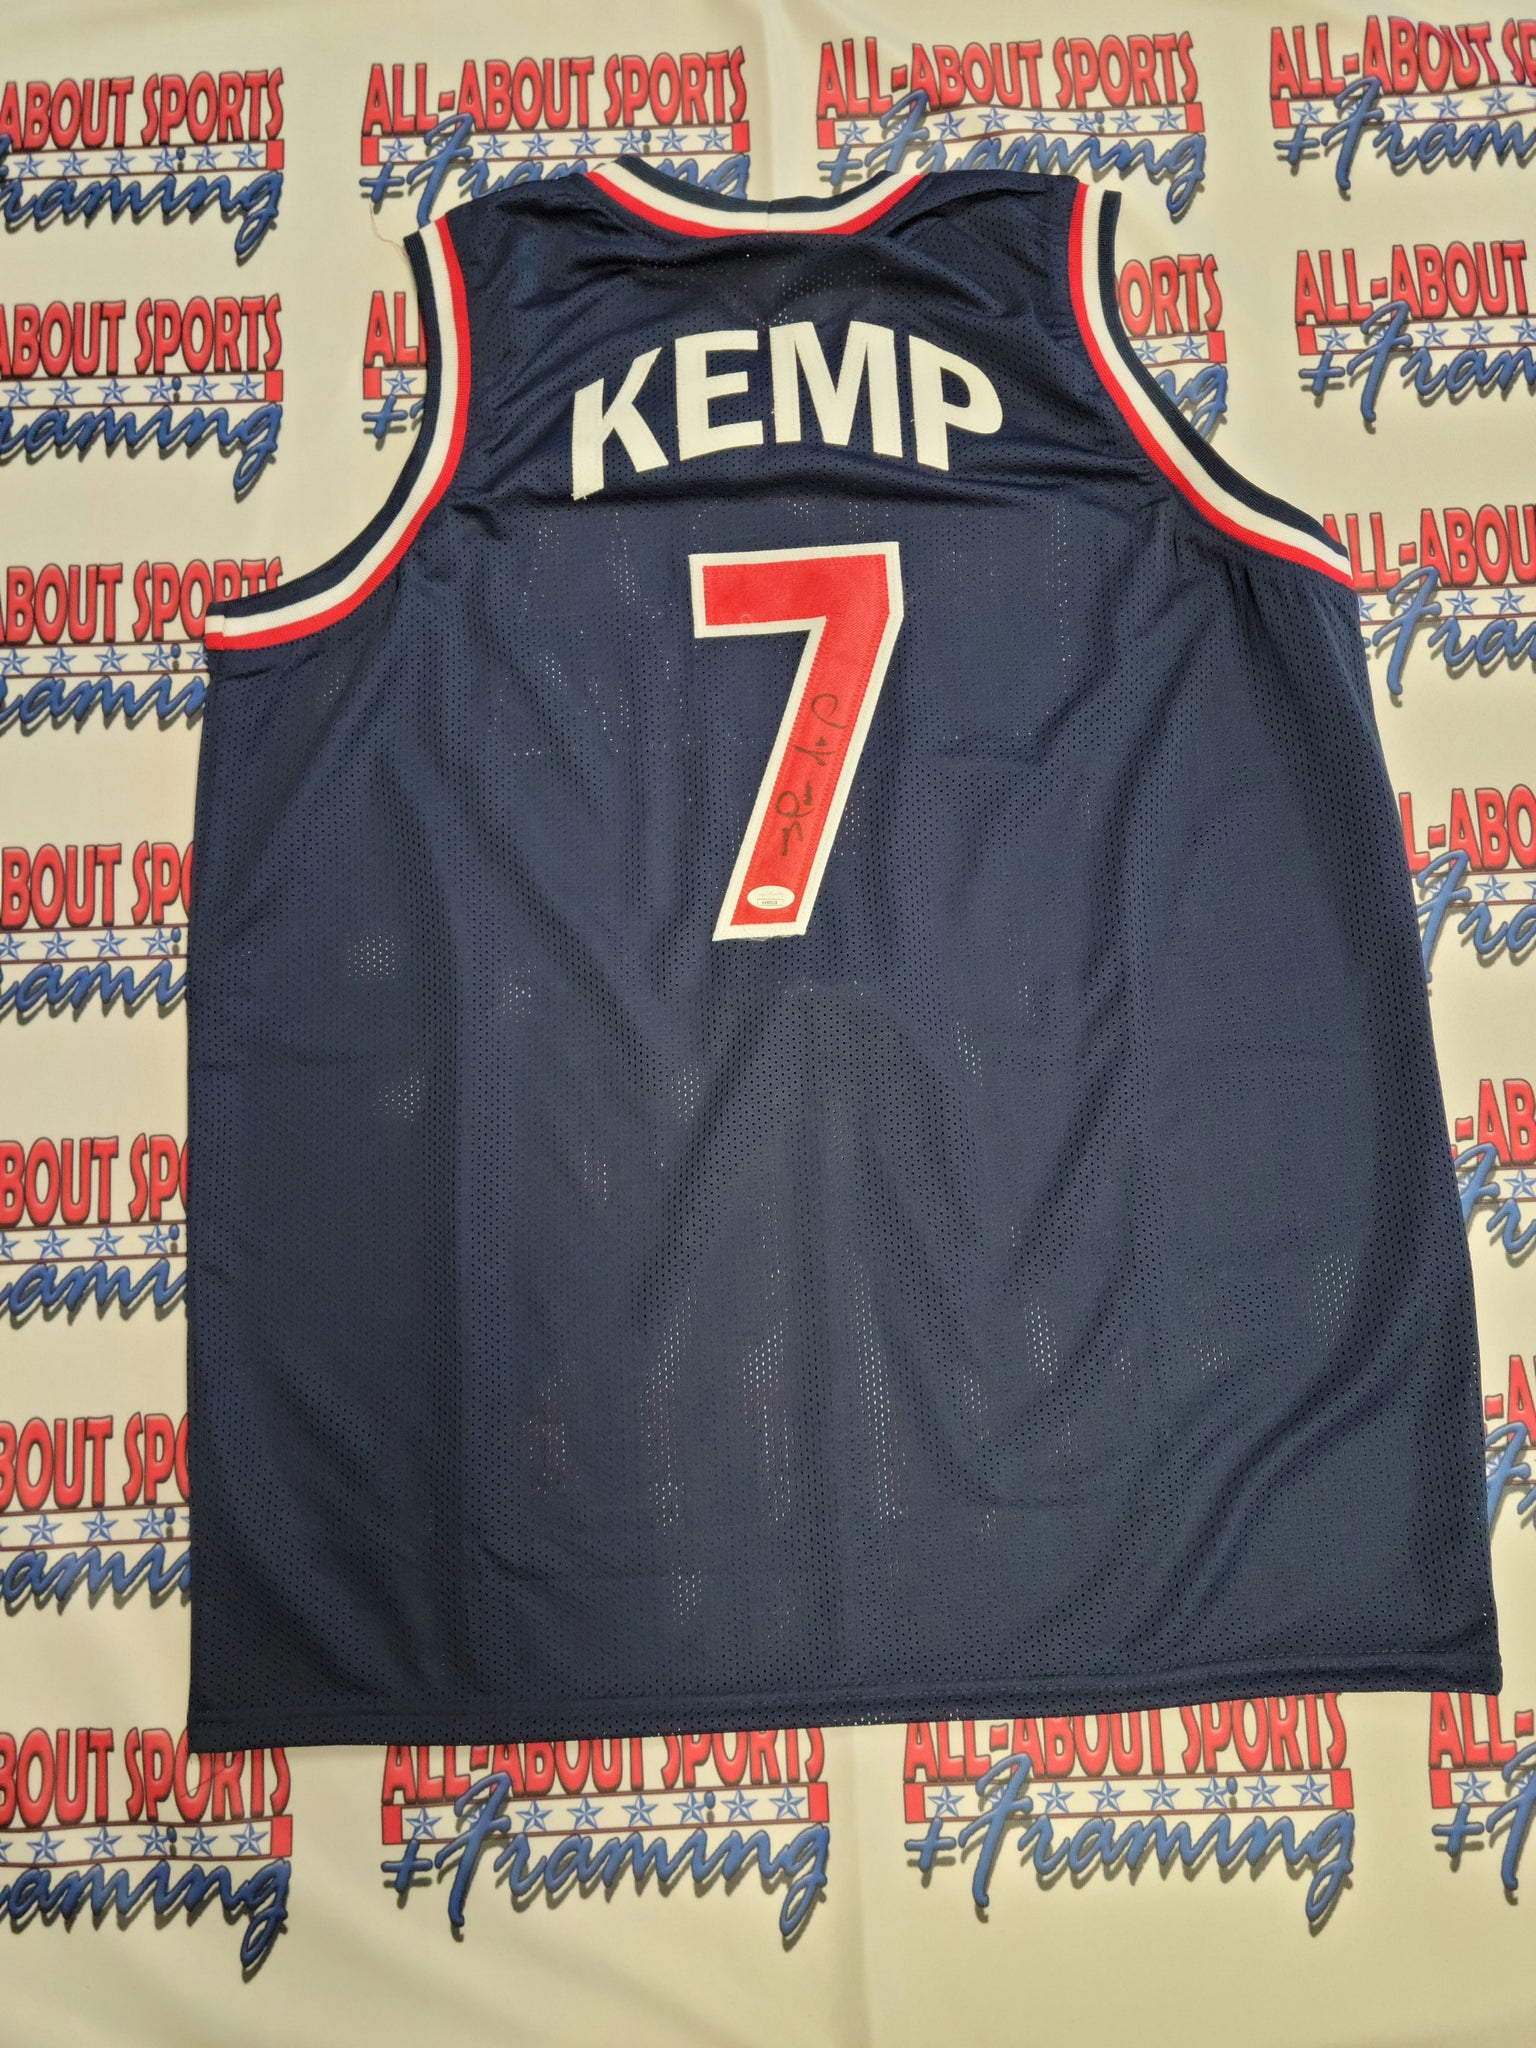 kemp signed jersey